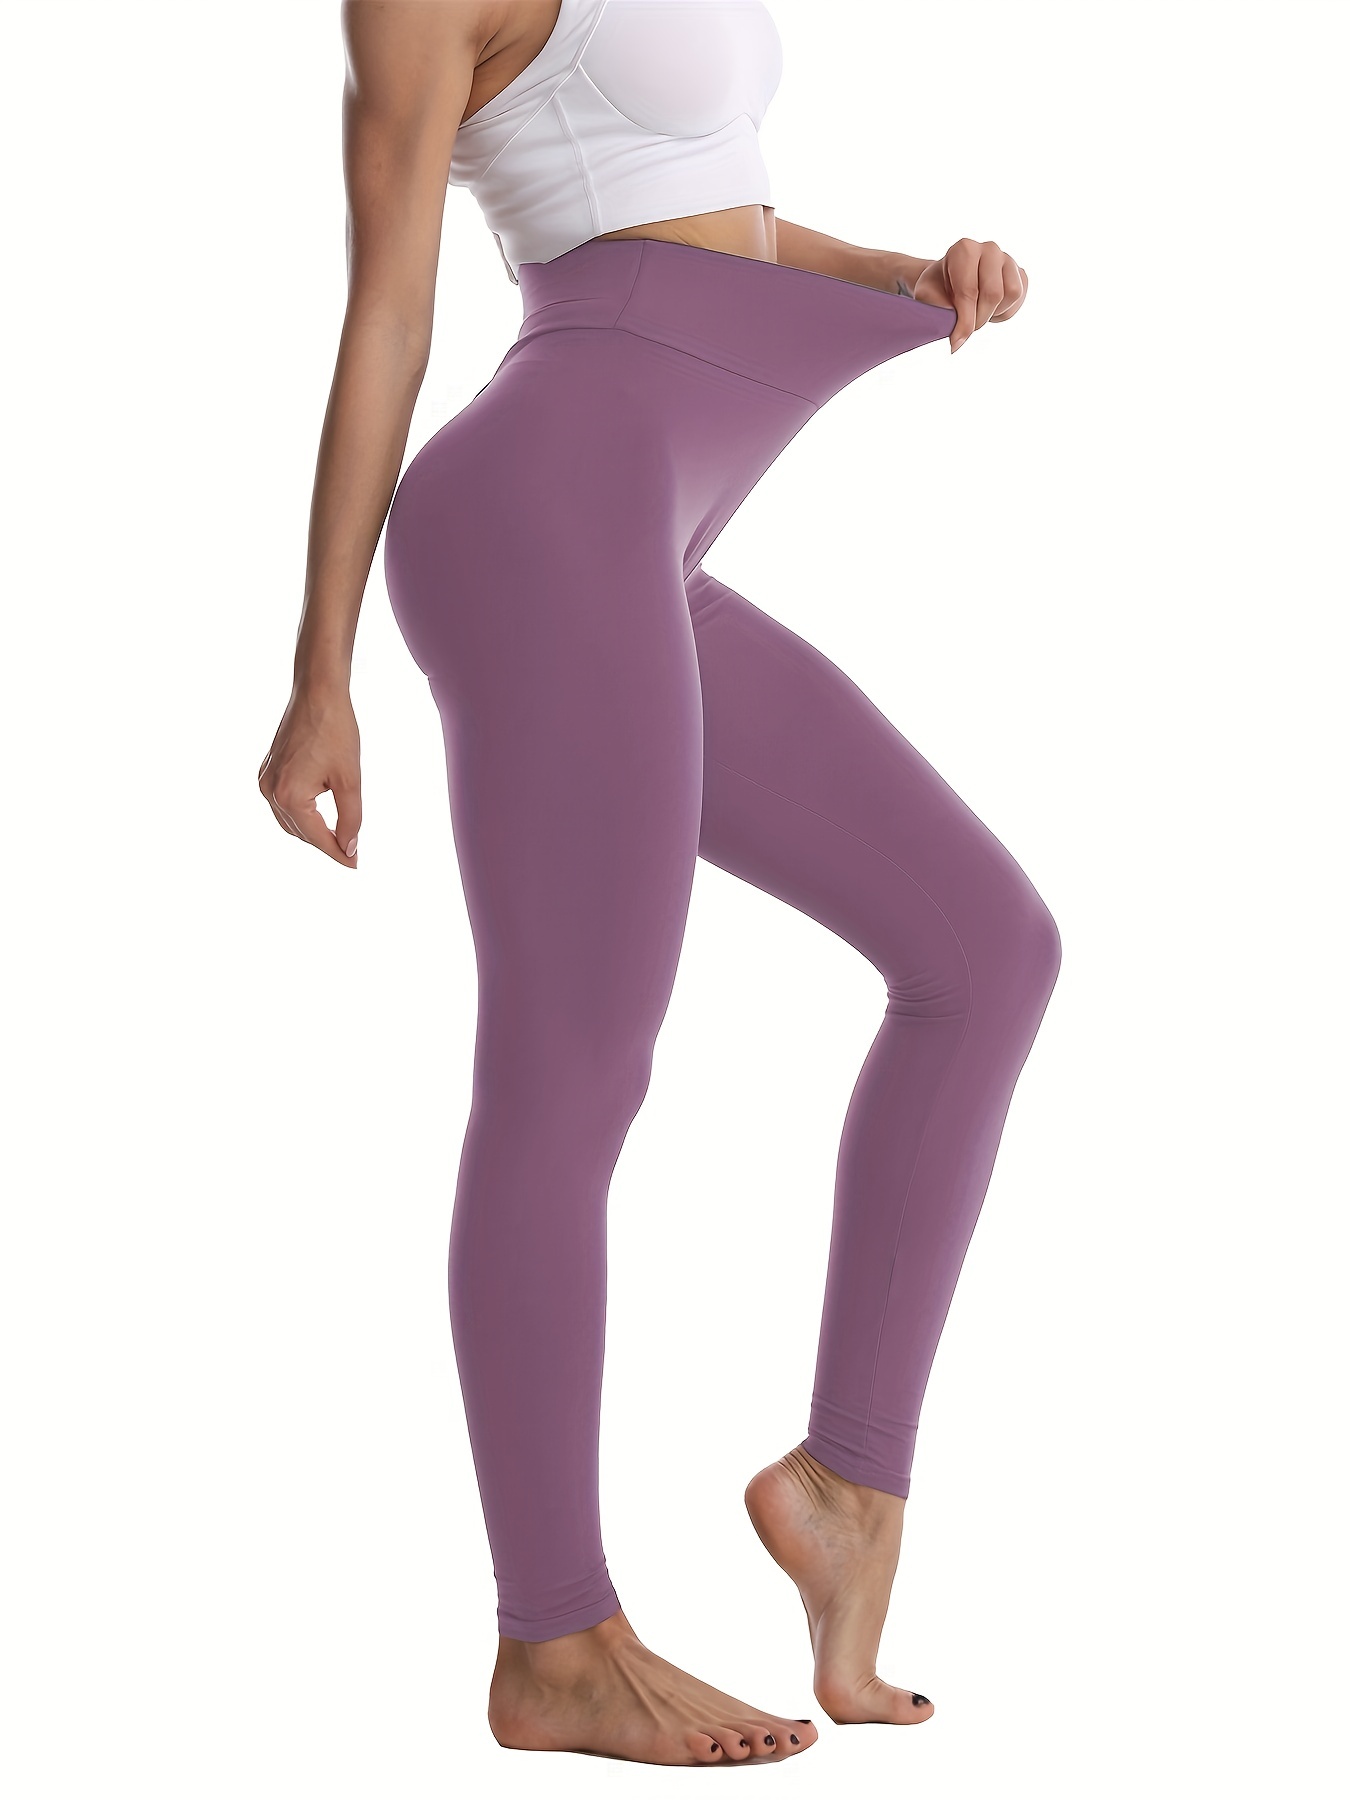 Women's High Waist Workout Yoga Pants Athletic Legging - Deep Violet / S